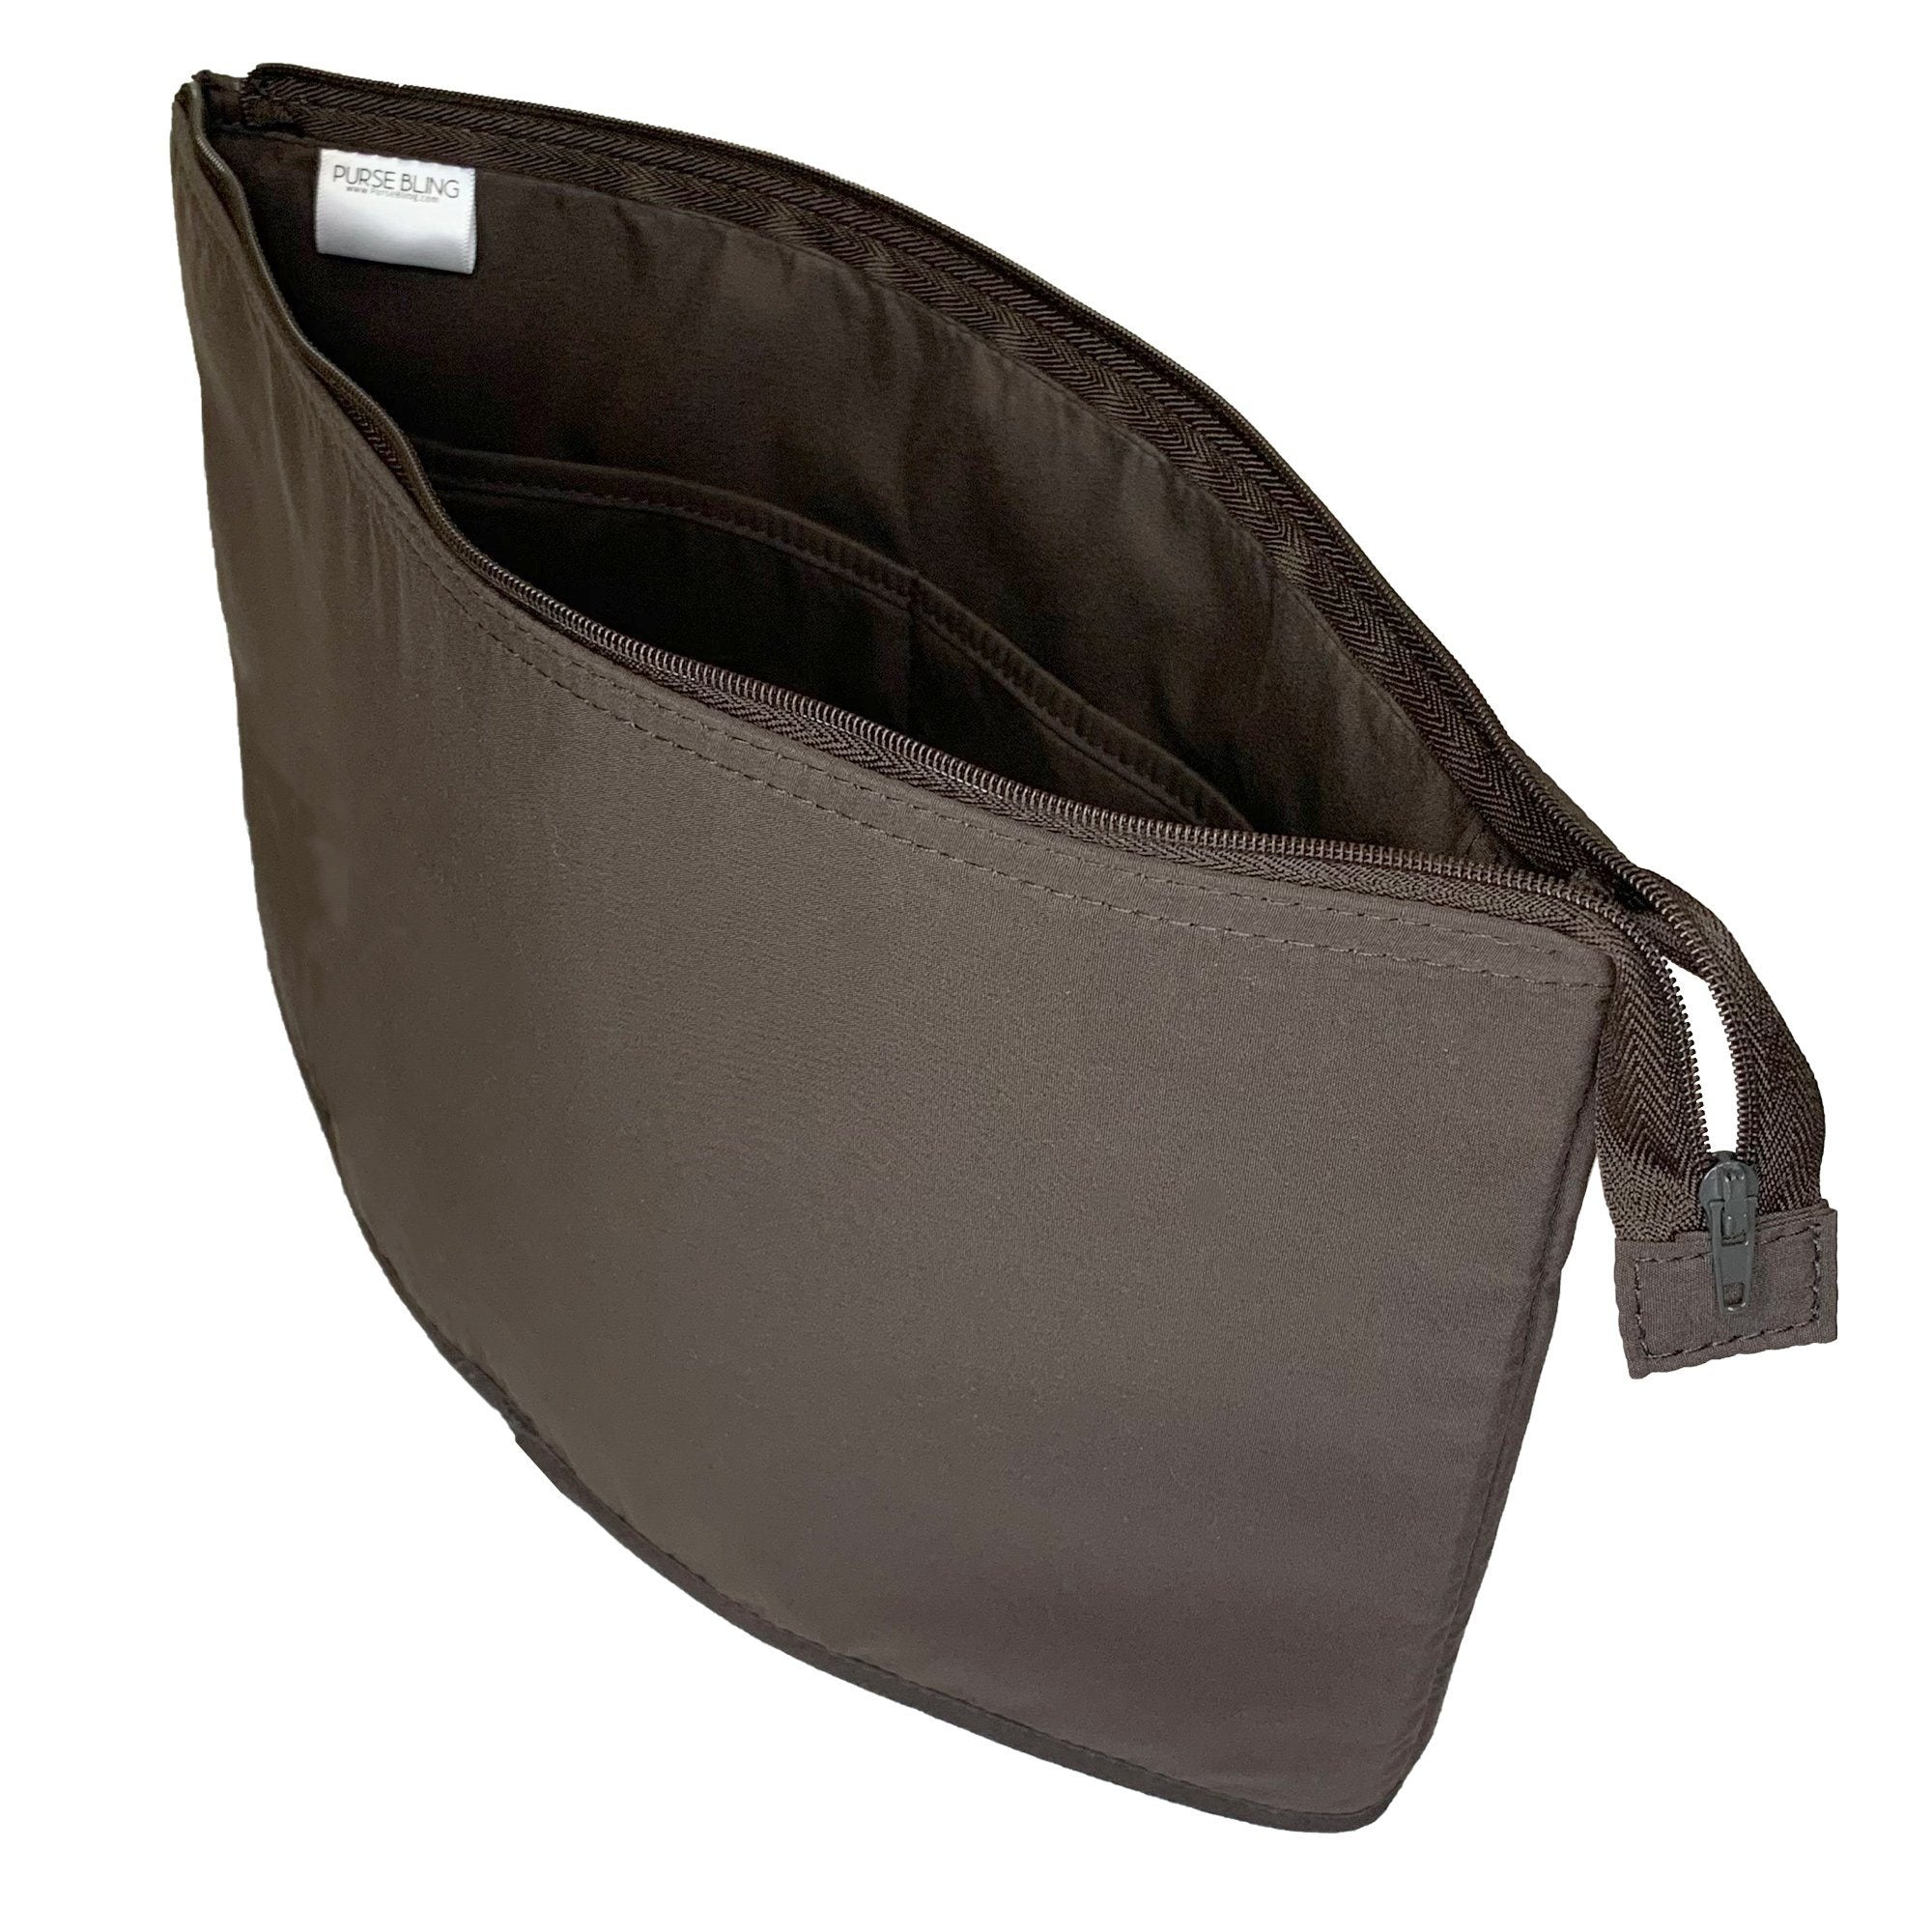 Crossbody Tote Bag Organizer Insert - multiple options – Sorelle Gifts